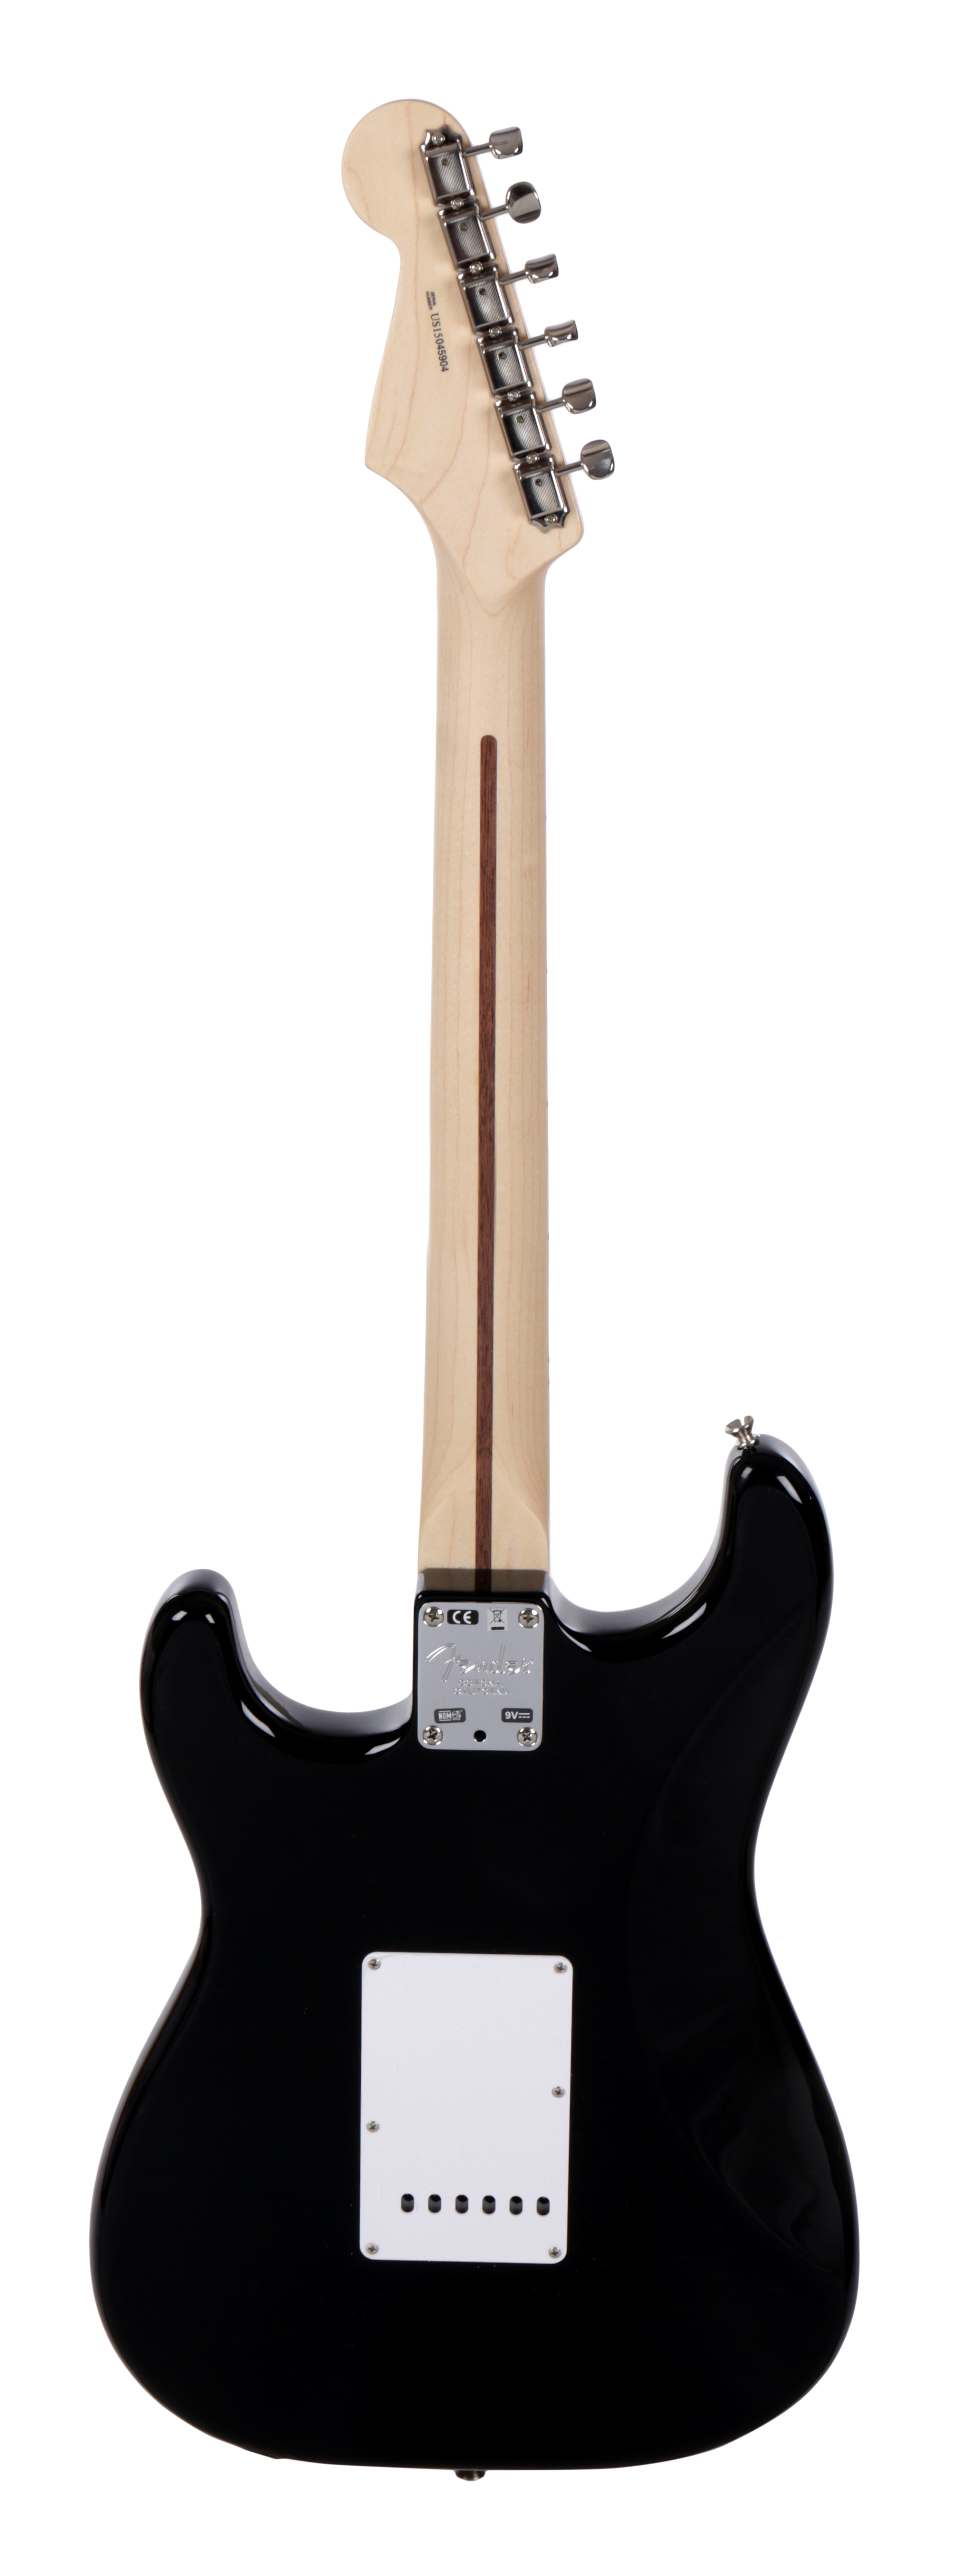 Eric Clapton Strat Maple Fretboard, black